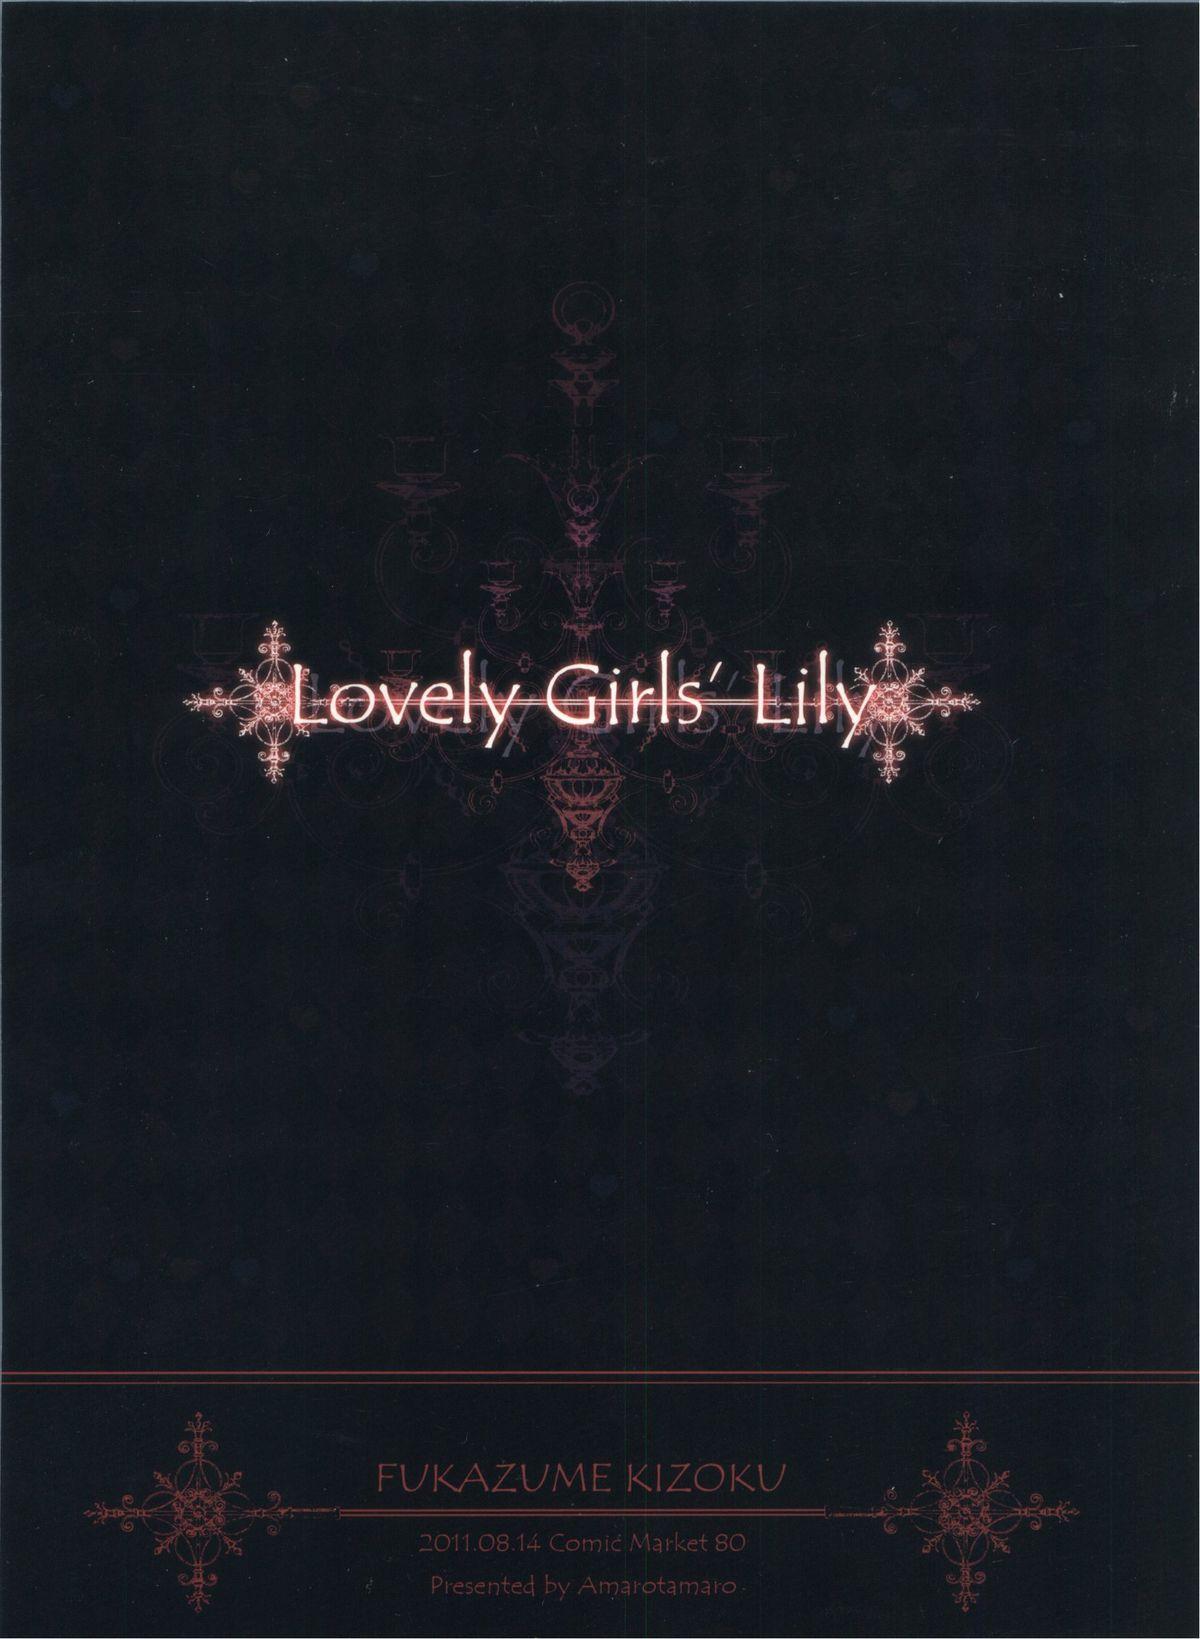 Lovely Girls' Lily vol.1 25